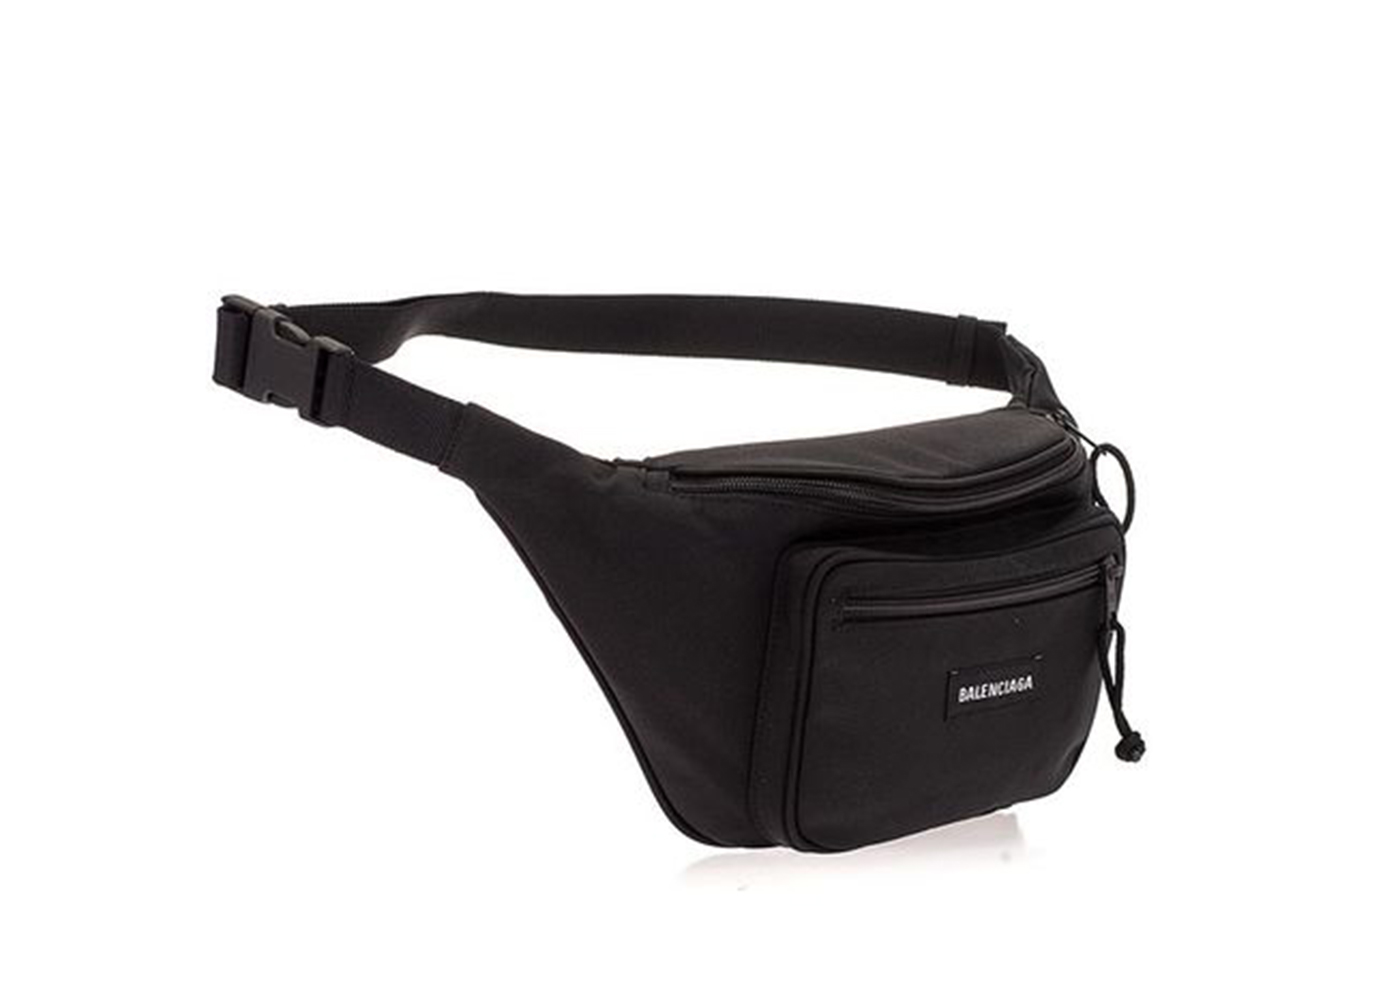 Balenciaga Explorer SS21 Belt Bag Black/White in Nylon with Black